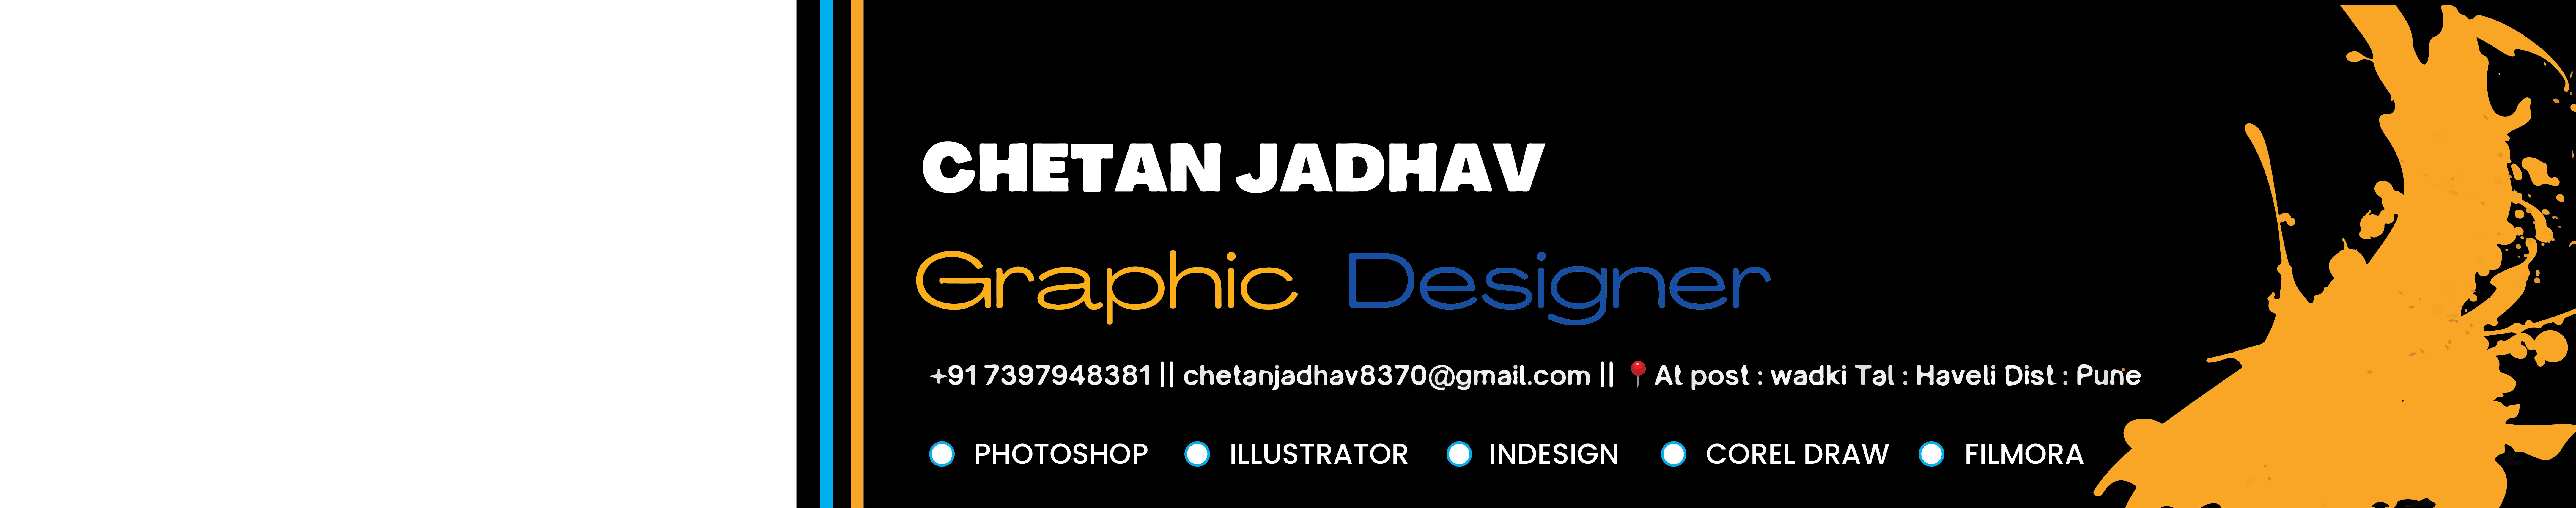 Chetan Jadhav's profile banner